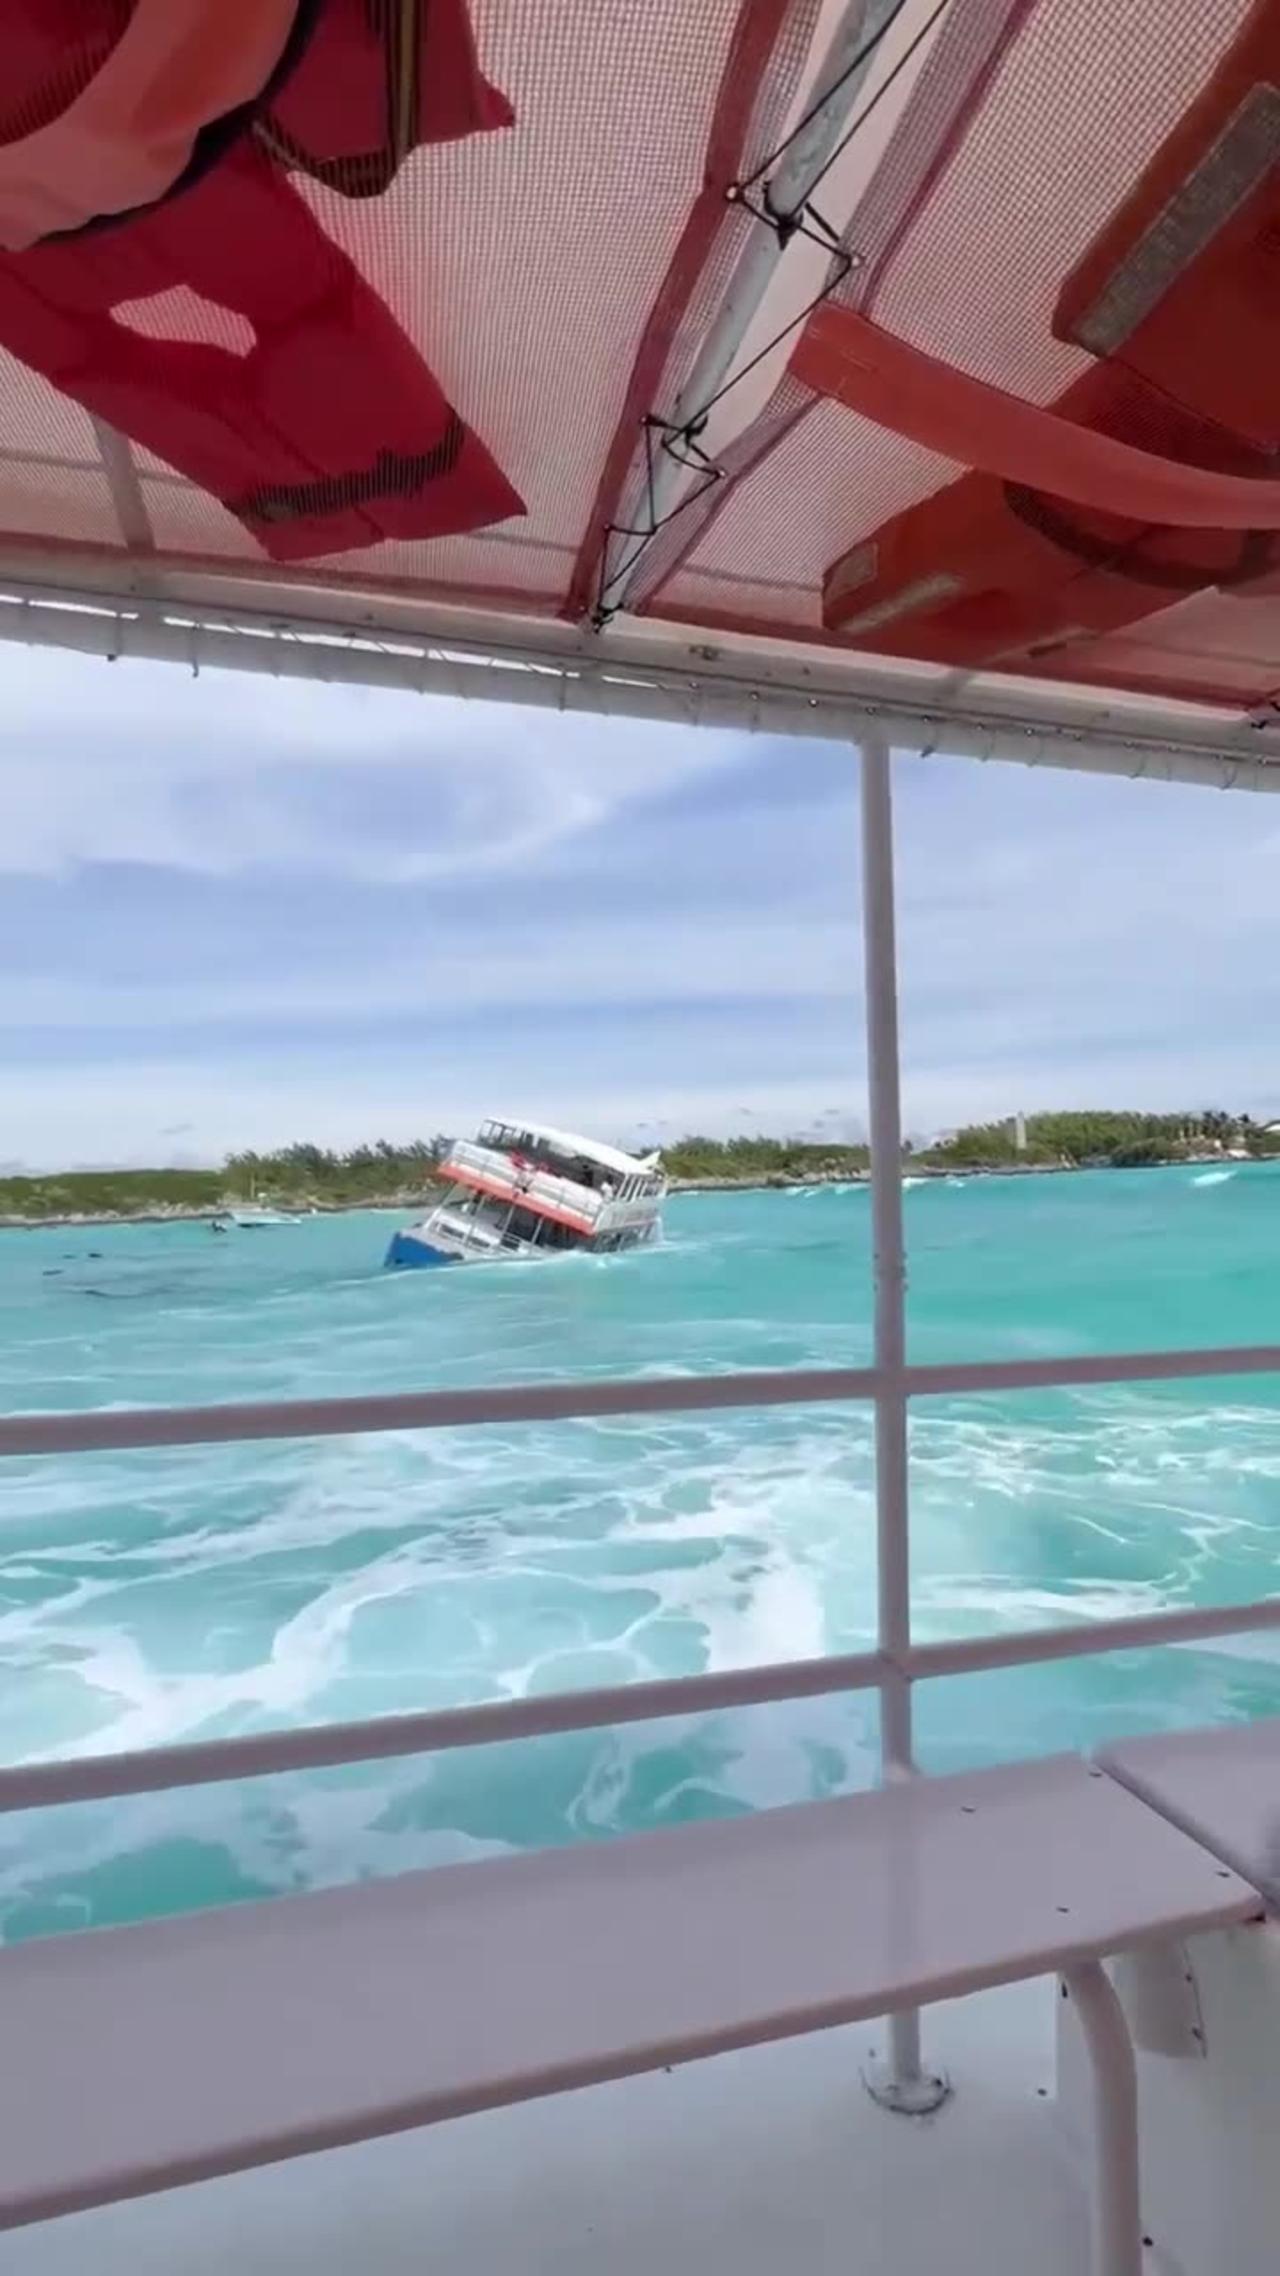 Cruise Ship Sinks In Bahamas